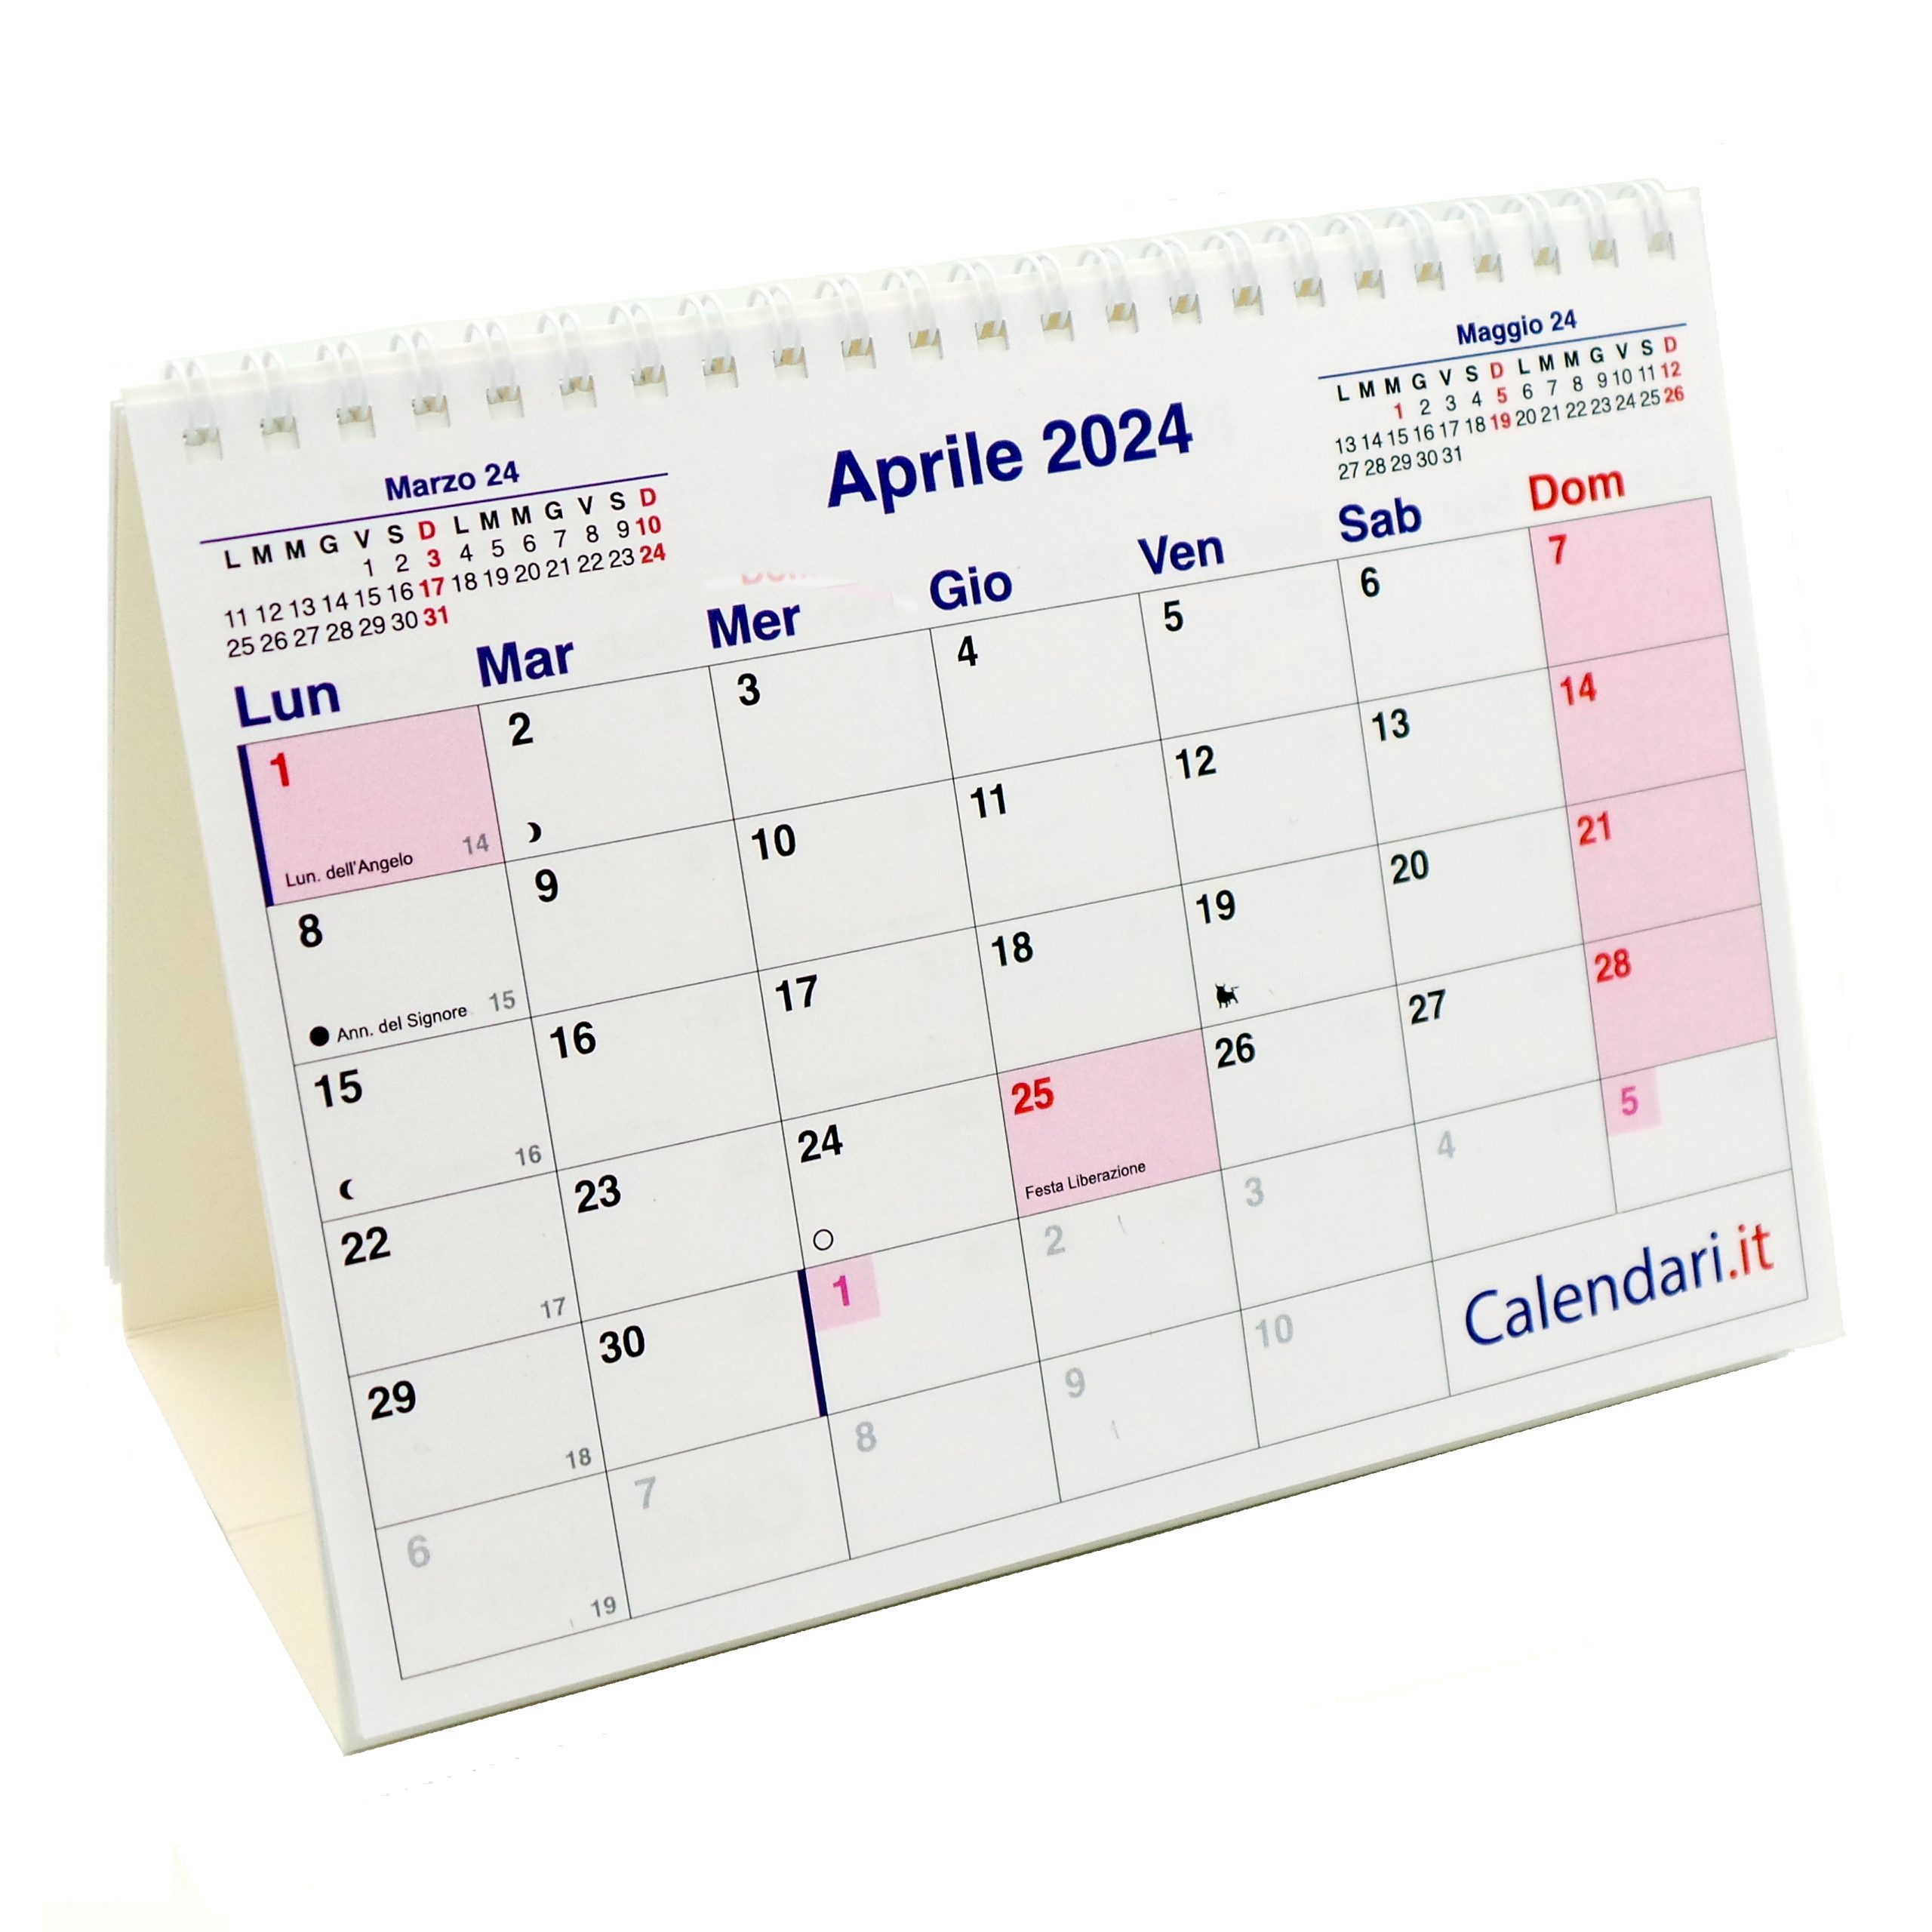 Calendario 2024 tavolo a caselle 20x15 cm -  - calendari 2024 - calendario  2024 - planner - agende - settimanali - famiglia - calendario da tavolo -  sottomano